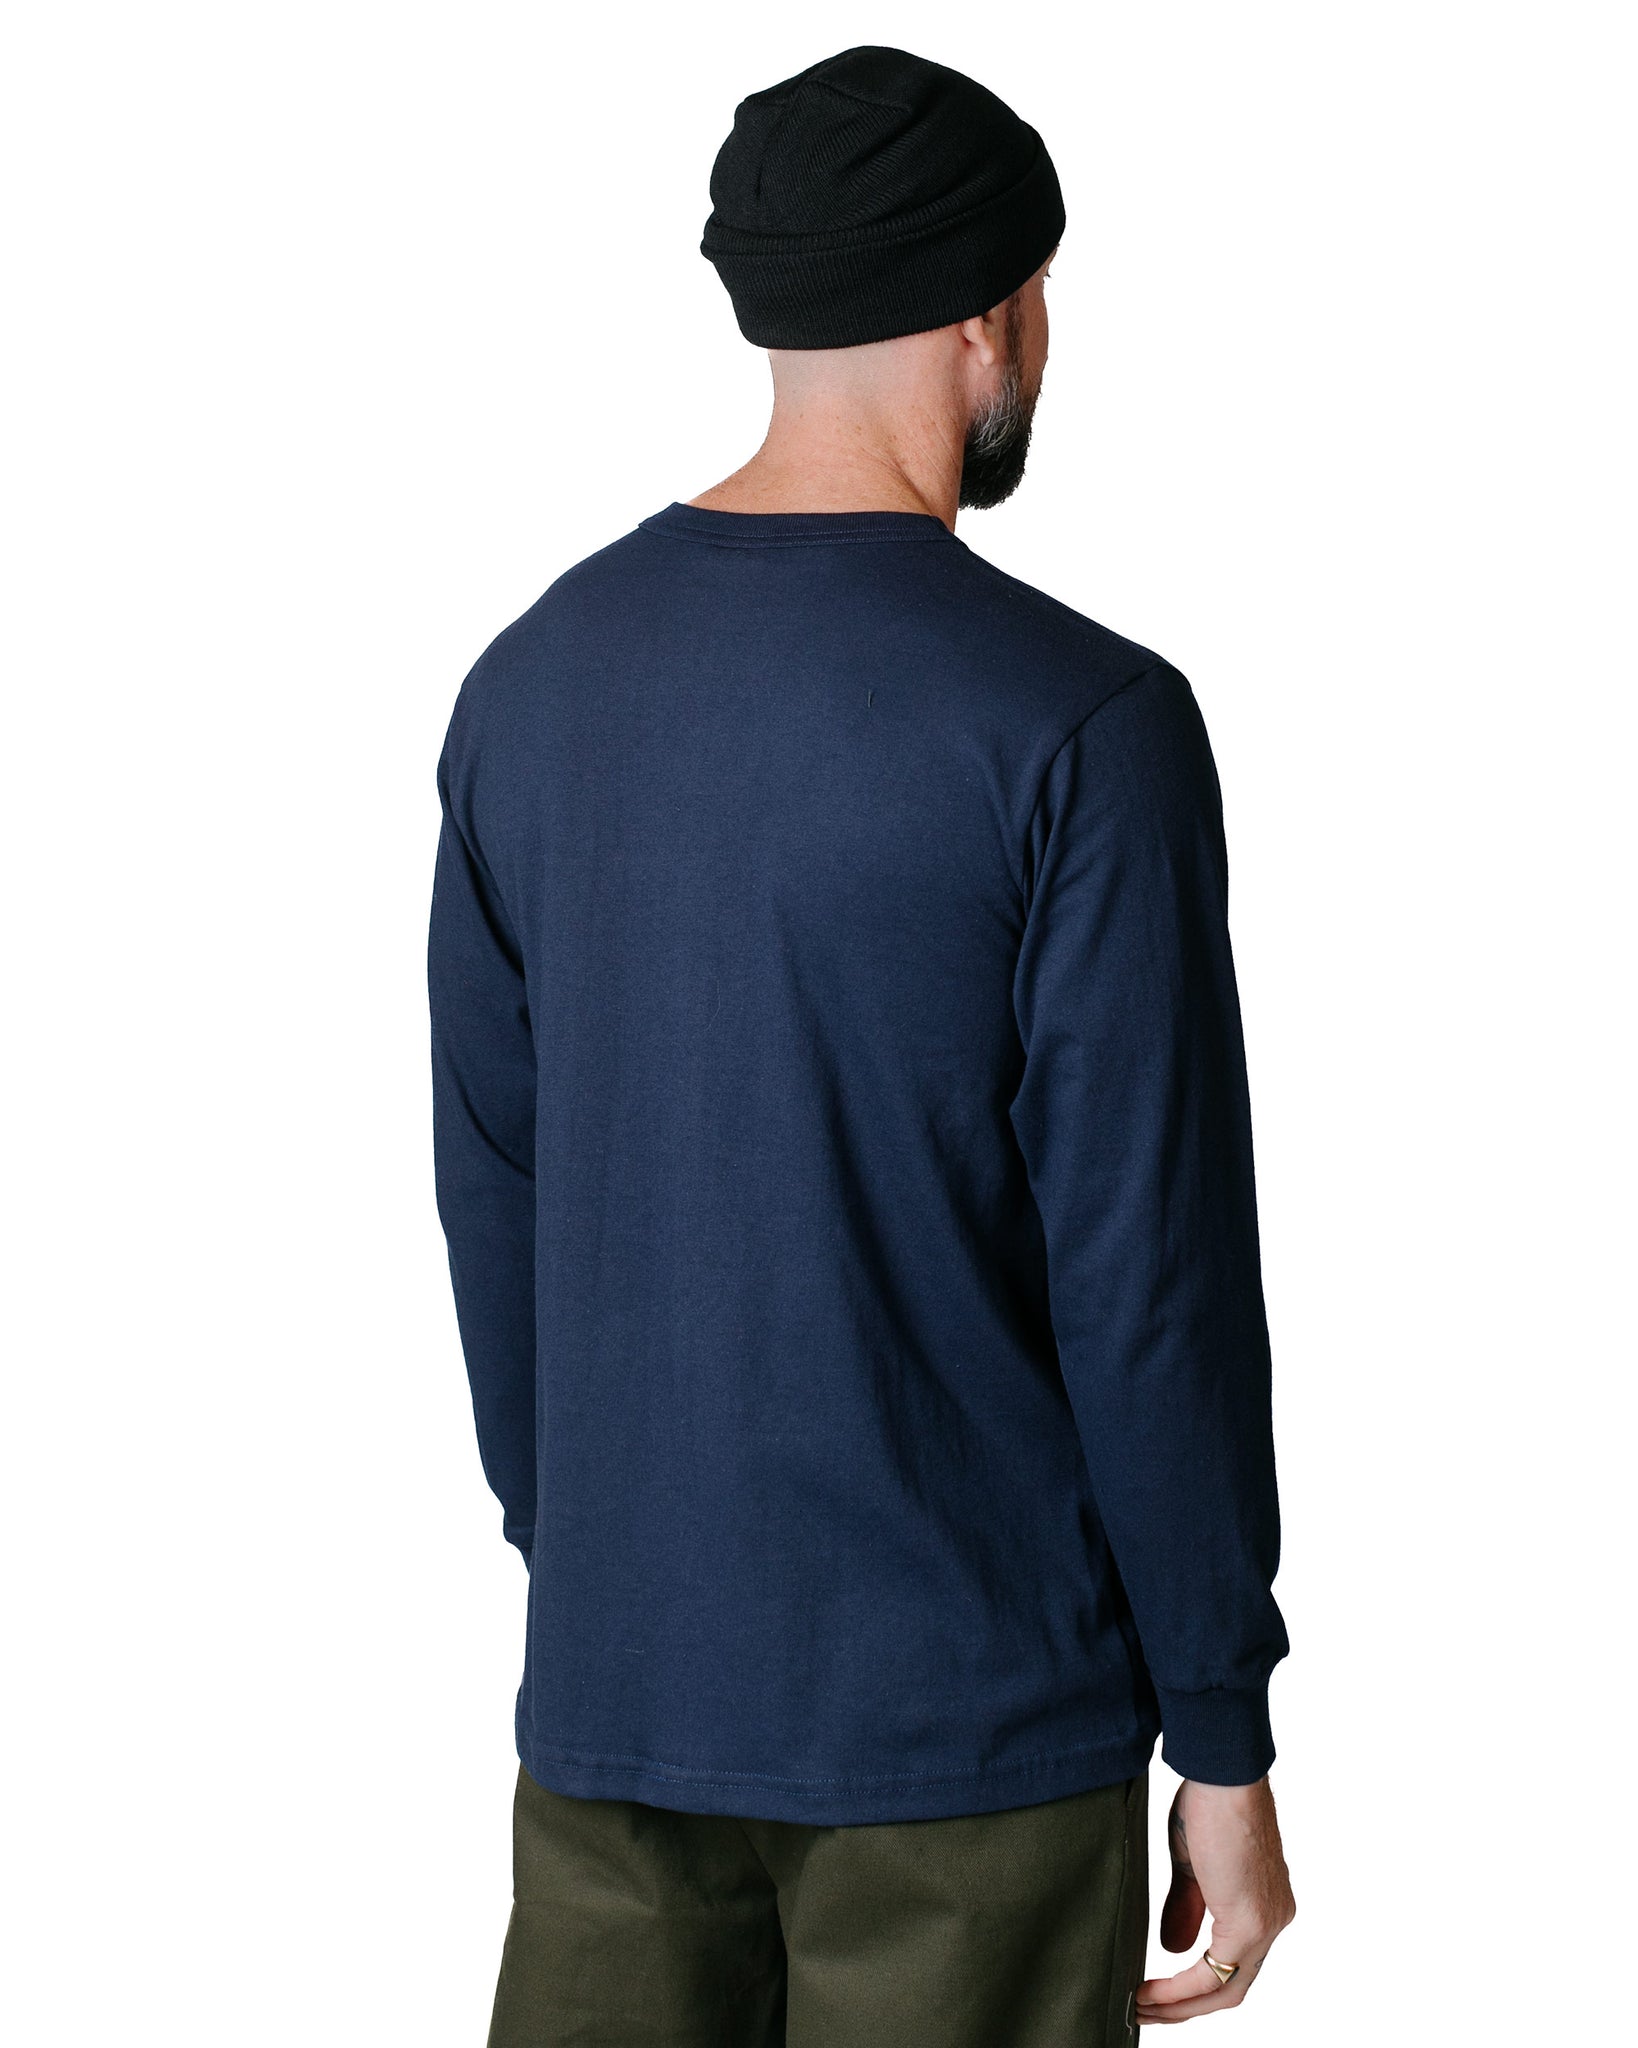 Randy's Garments Long-Sleeve Pocket Tee Navy model back